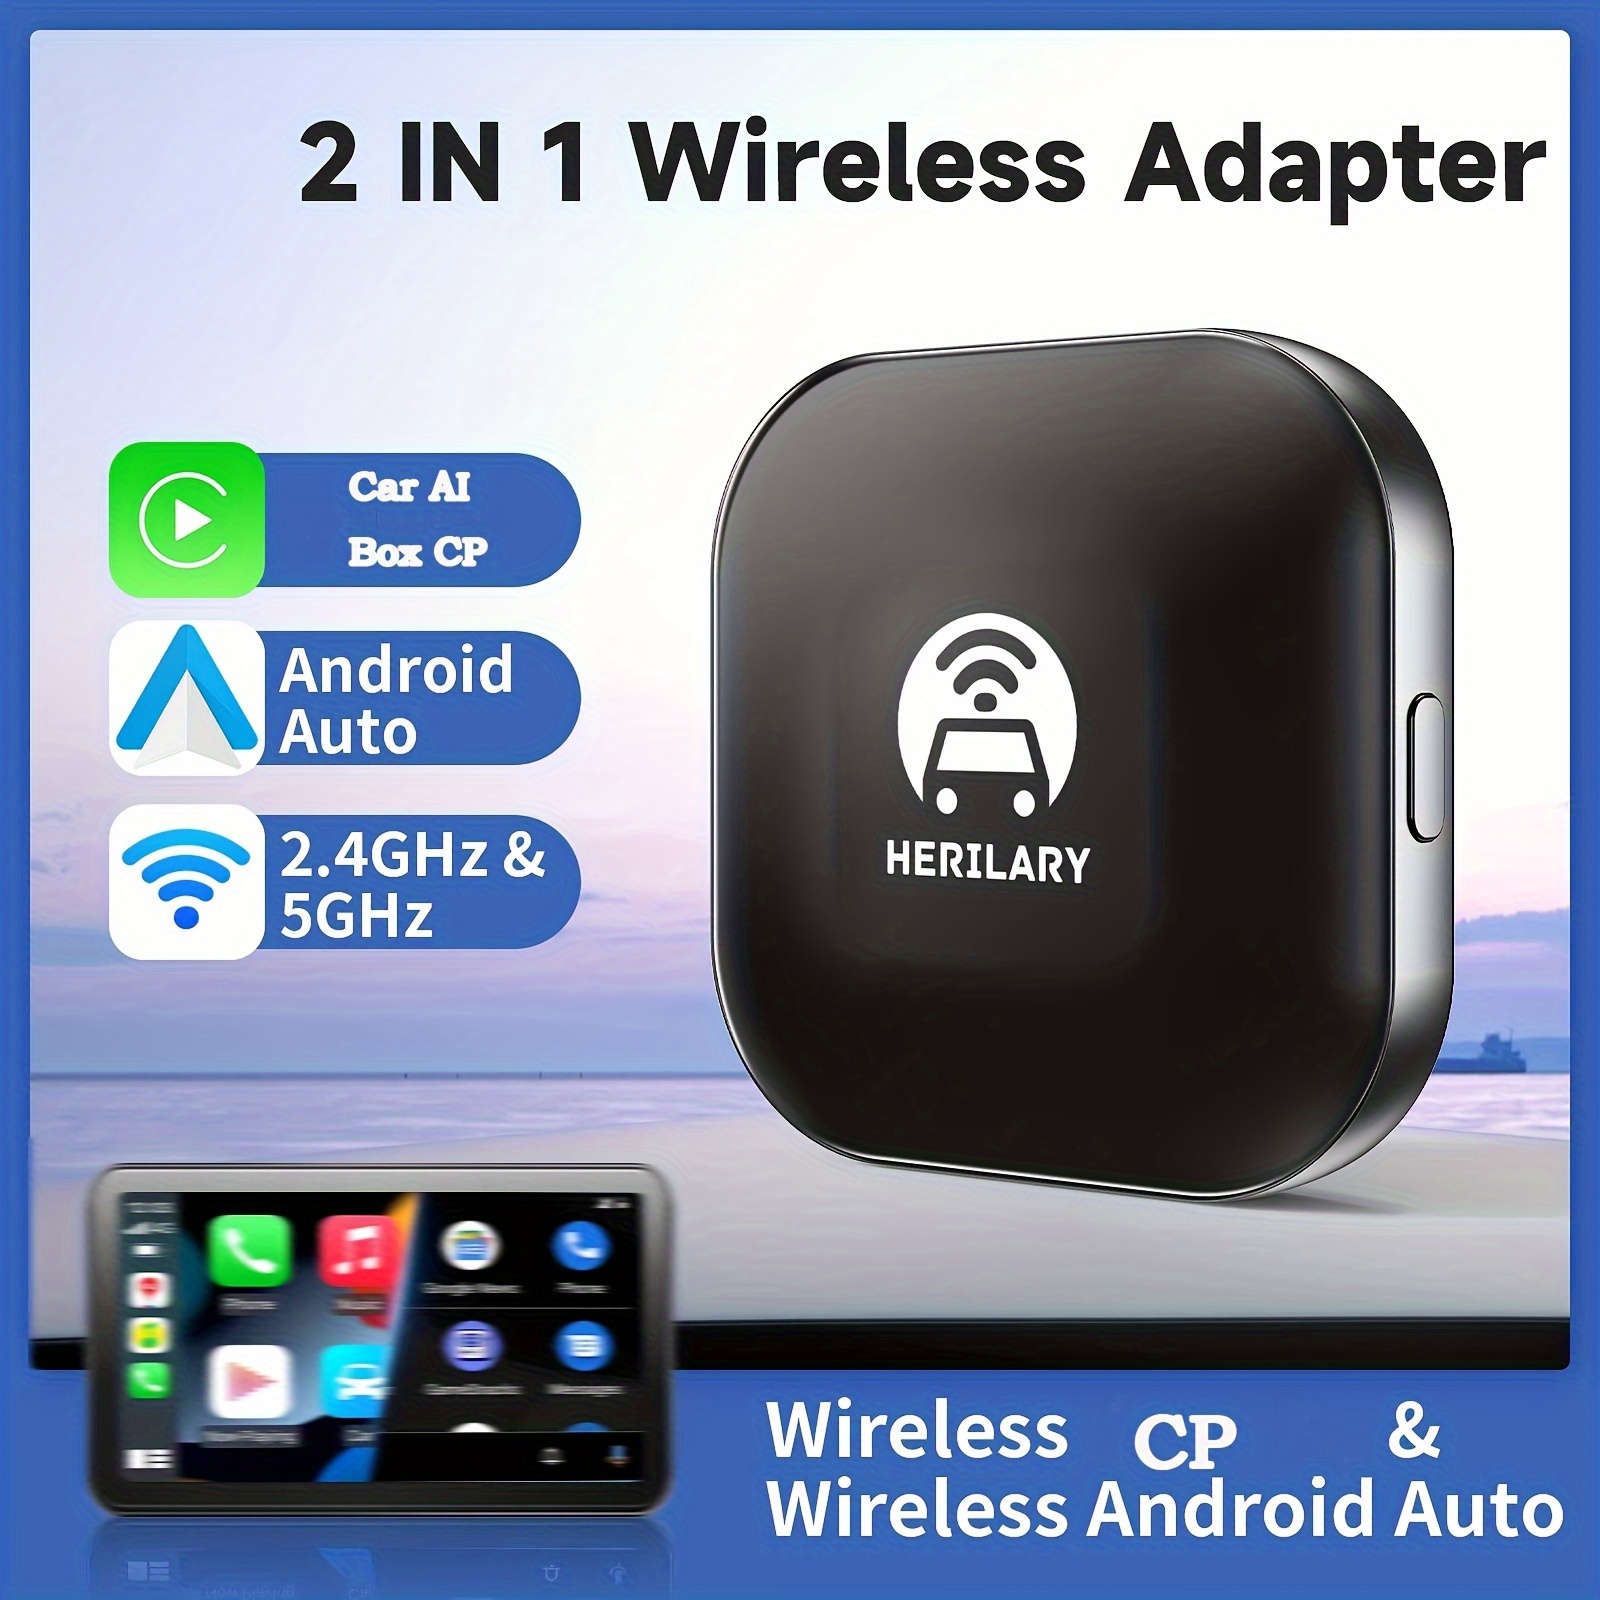 Car - Wireless CarPlay Adaptor